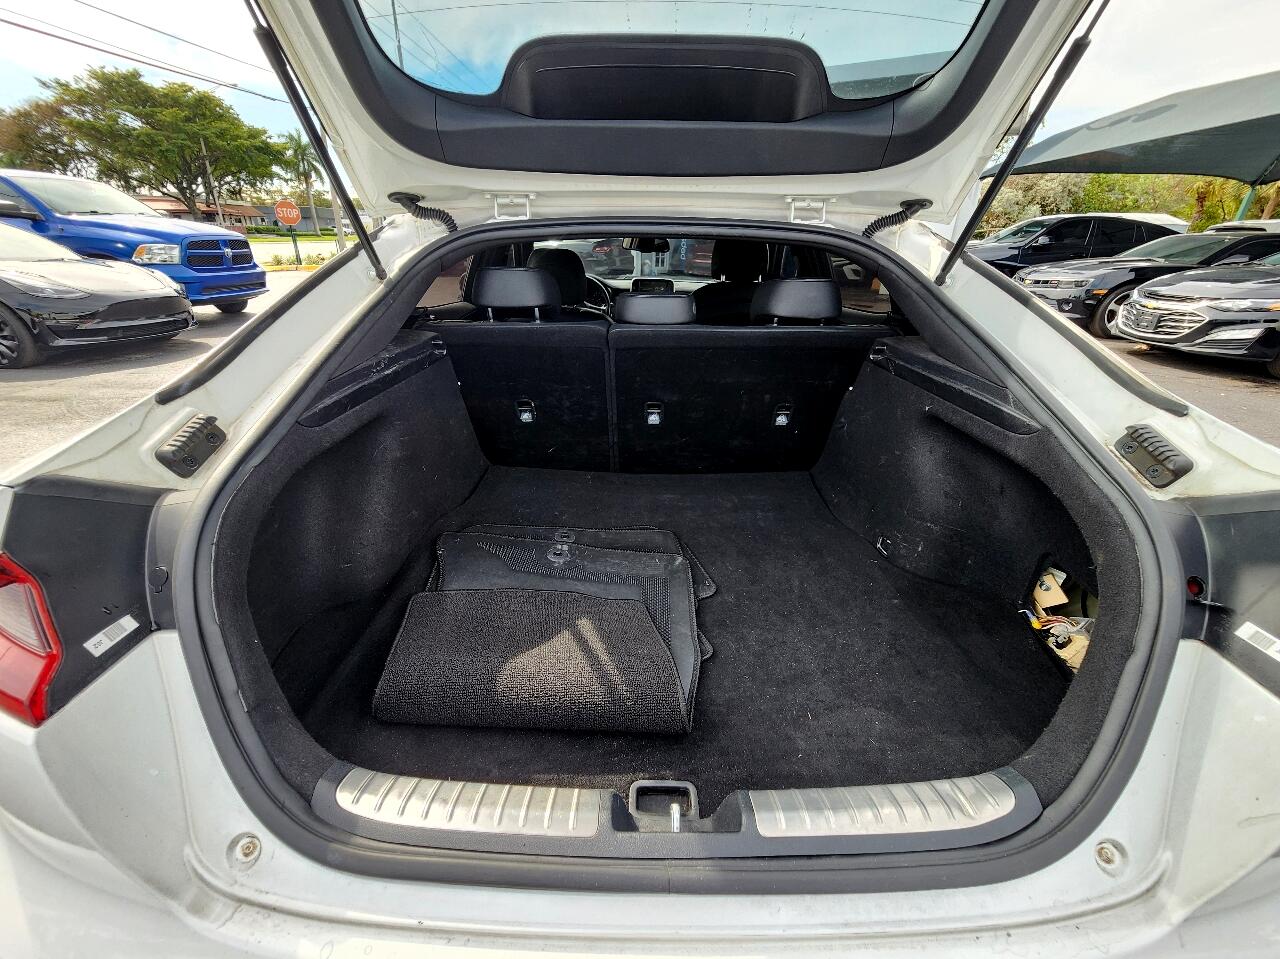 2021 KIA Stinger Hatchback - $23,999